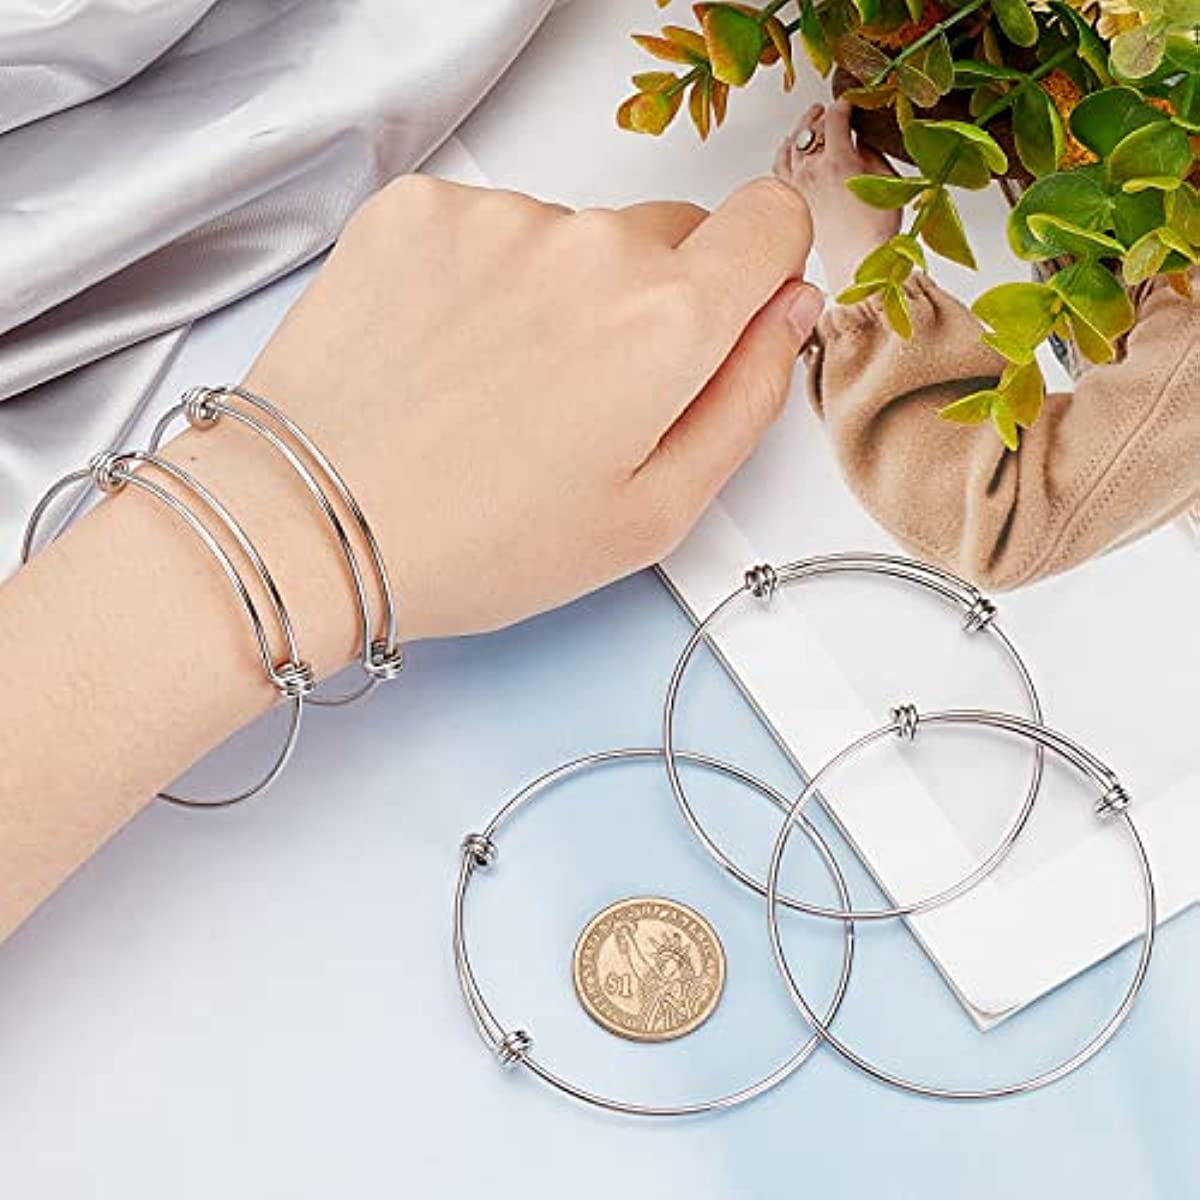 Solid 925 sterling silver handmade stylish designer fancy baby adjustable  bangles bracelet, excellent kids charm jewelry bbk76 | TRIBAL ORNAMENTS